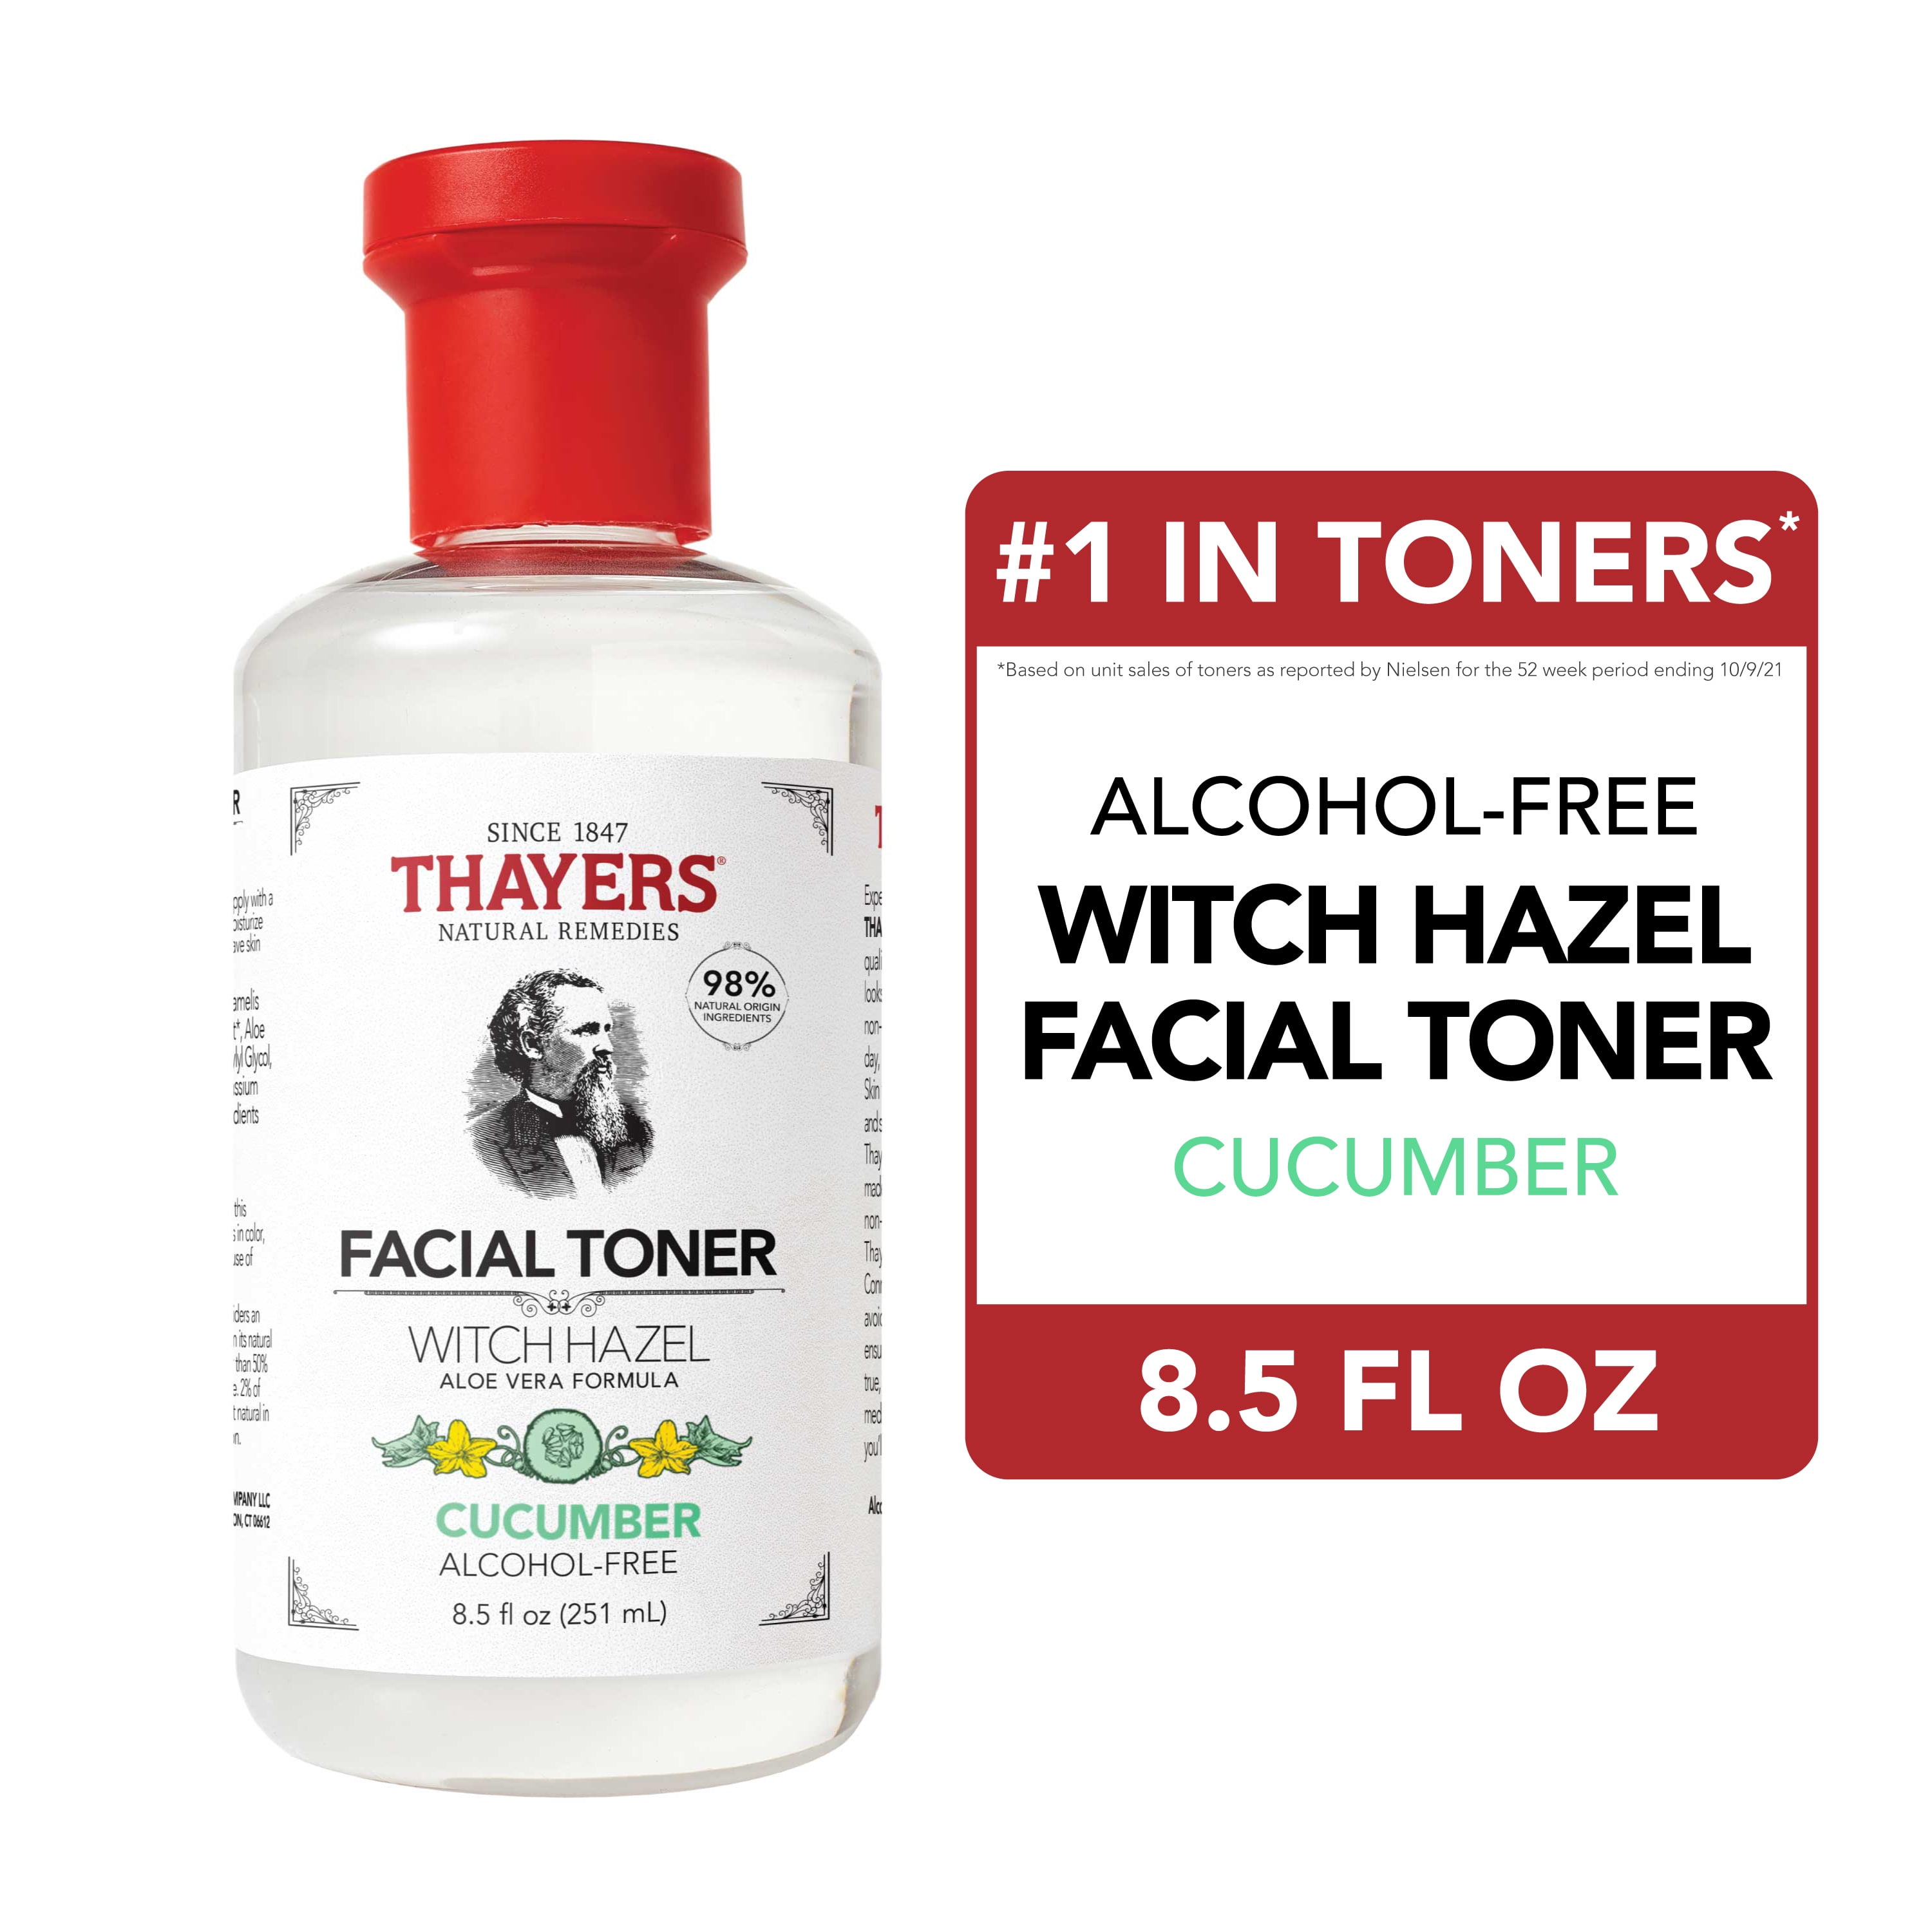 homemade facial toner with witch hazel